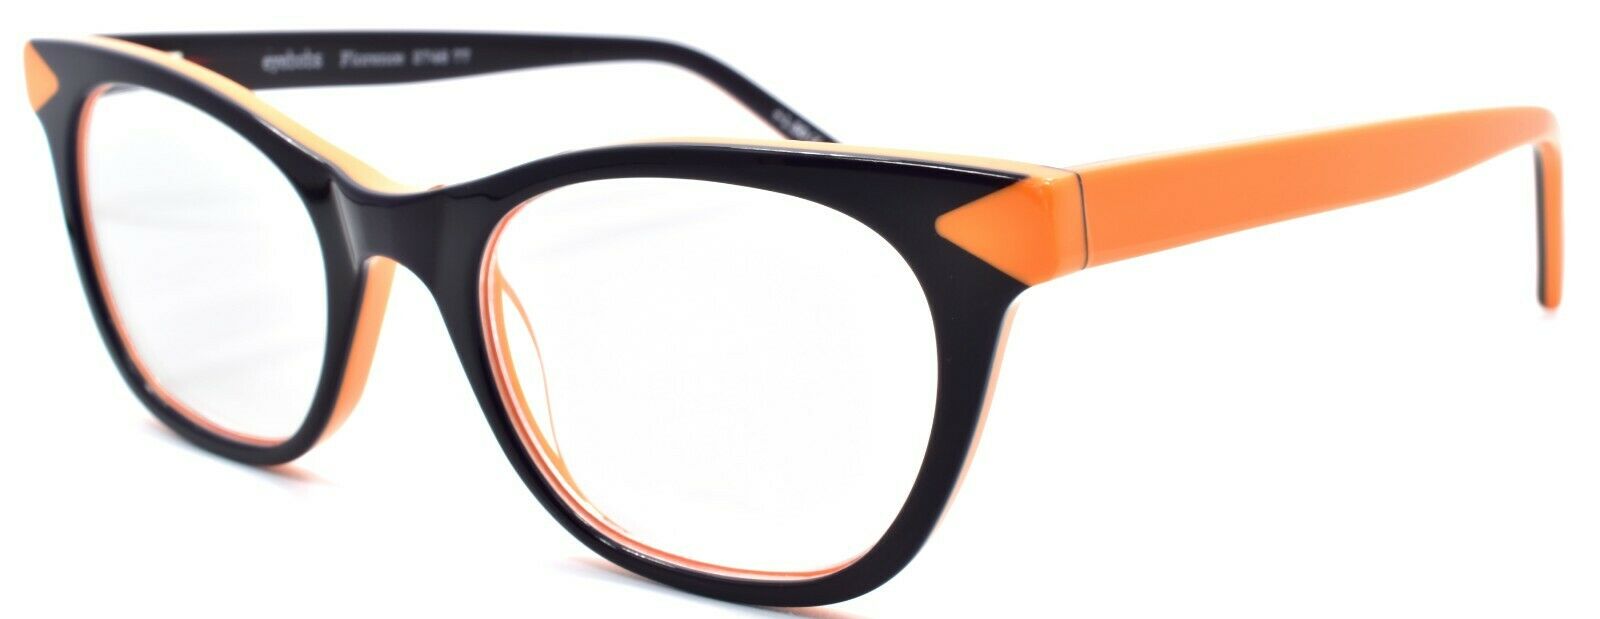 1-Eyebobs Florence 2746 77 Women's Reading Glasses Purple / Orange +2.50-842754160834-IKSpecs